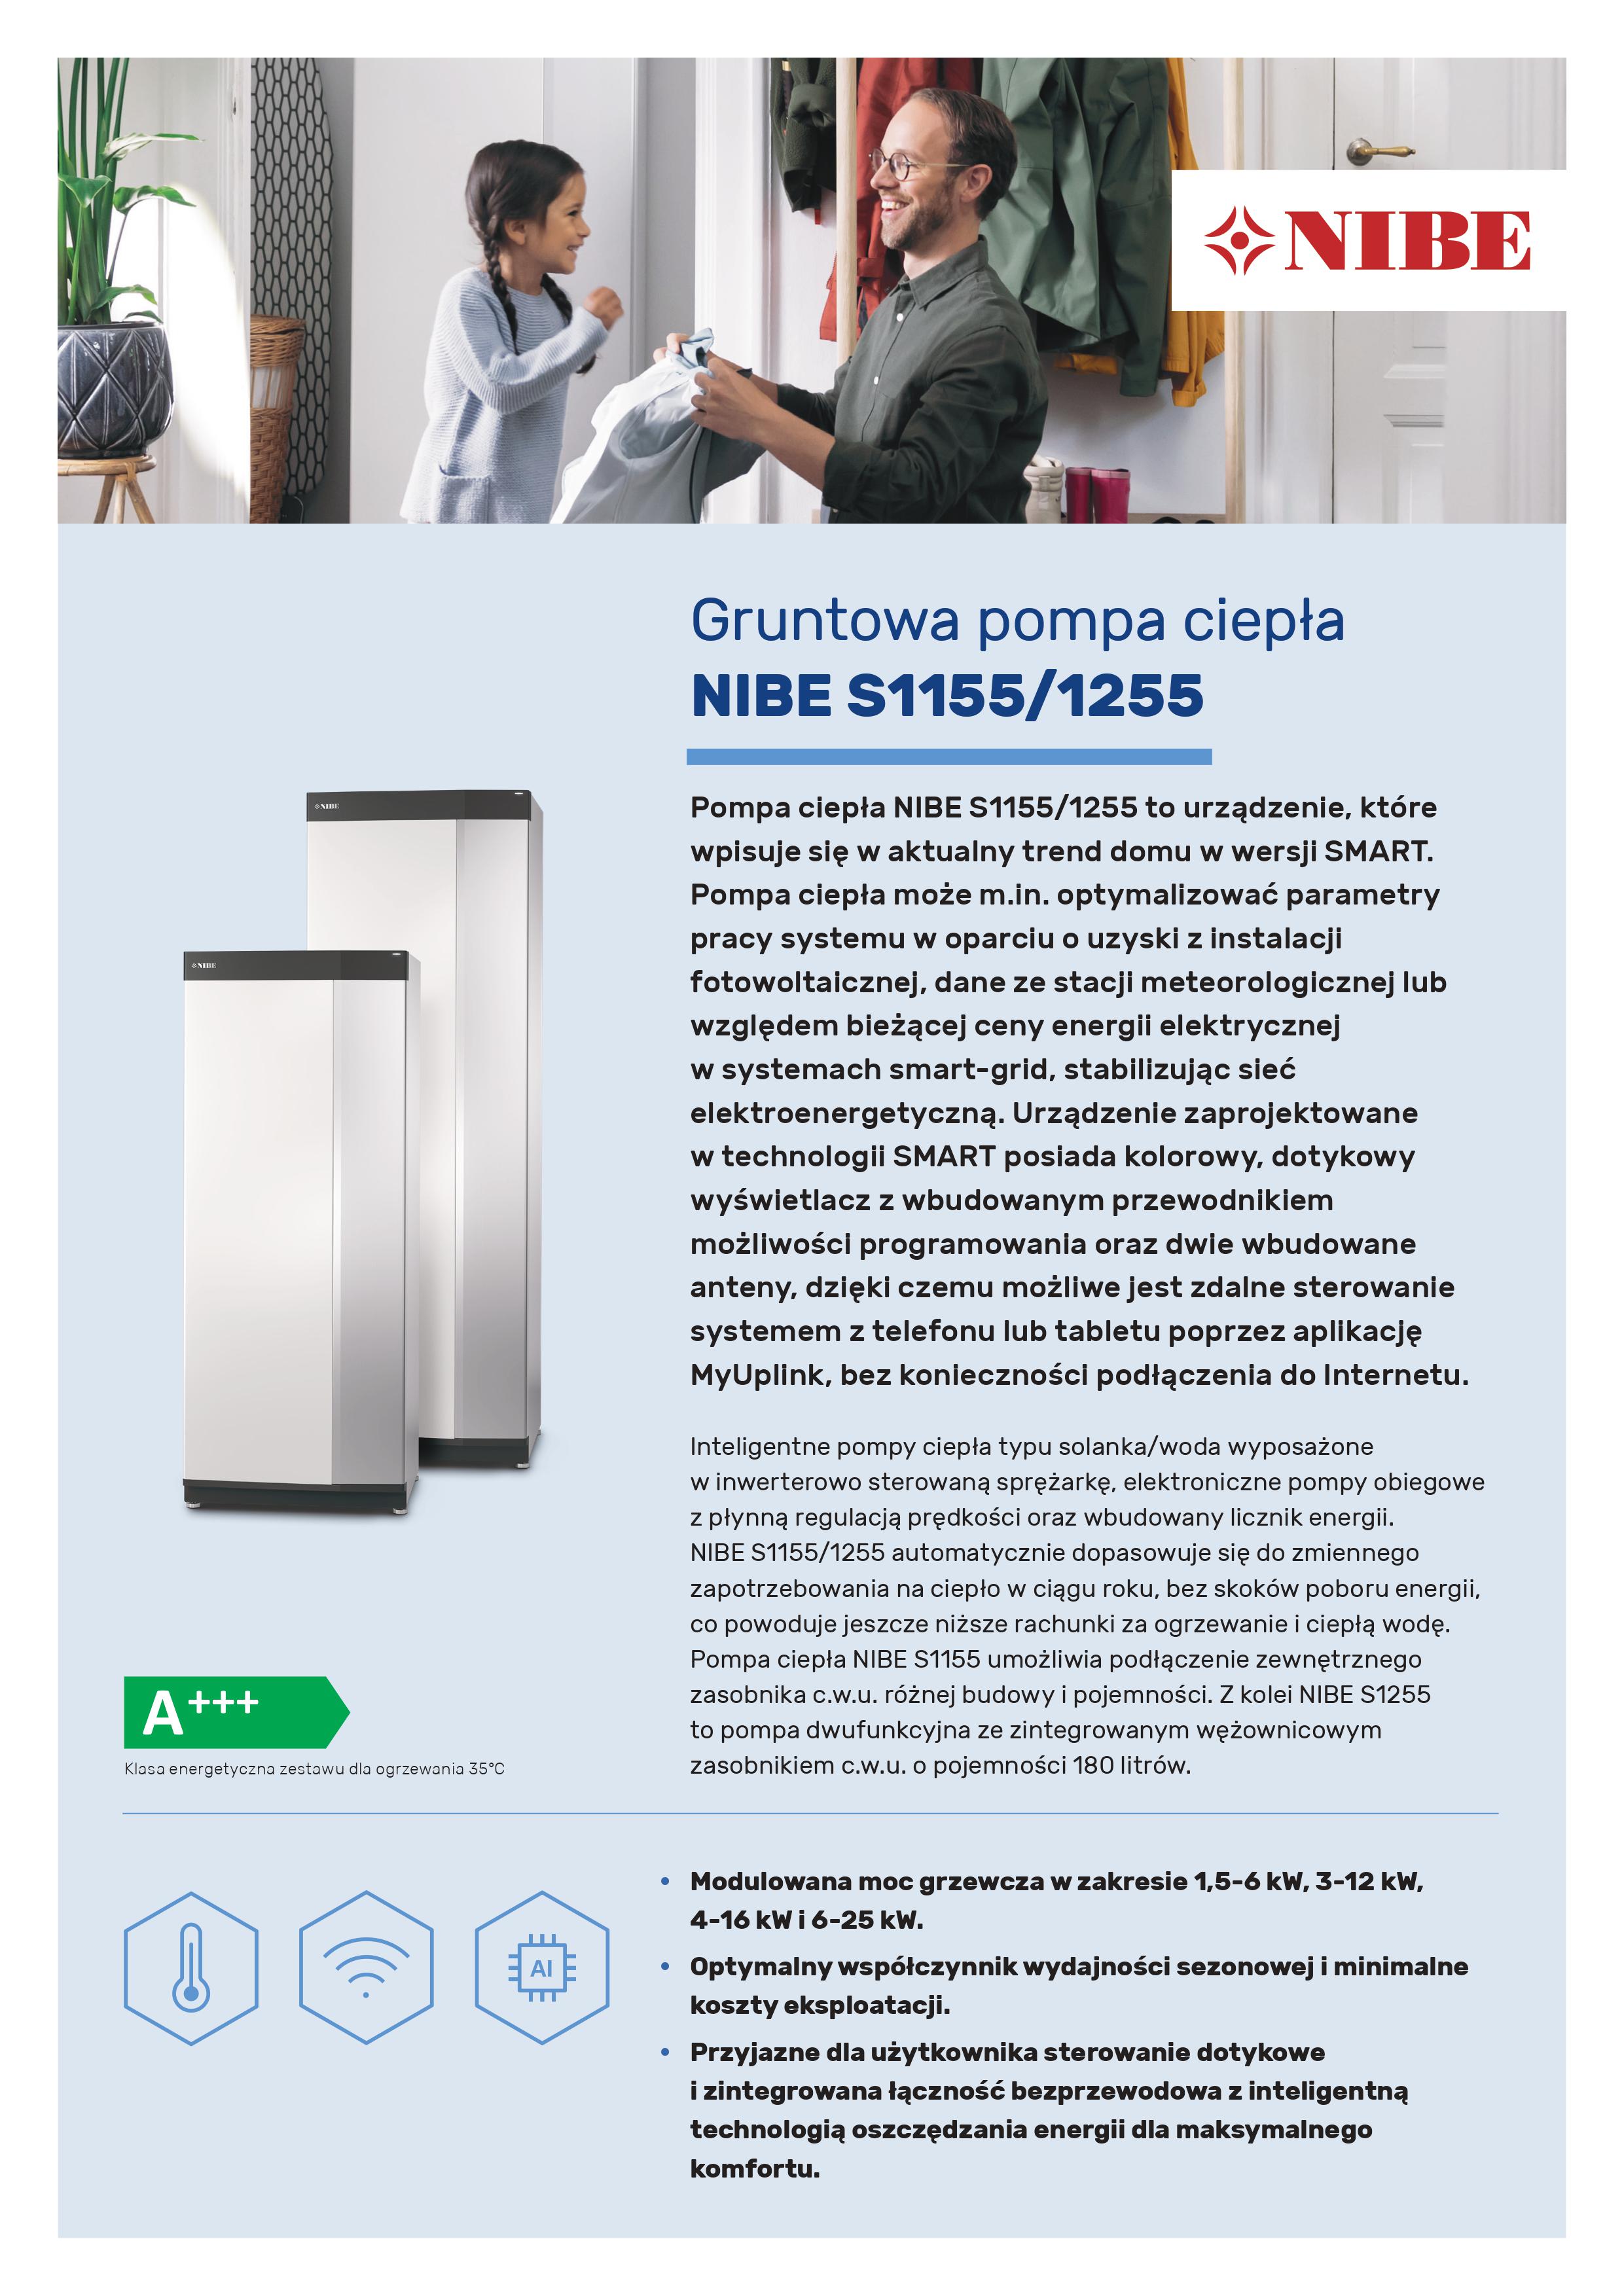 NIBE S1155/S1255